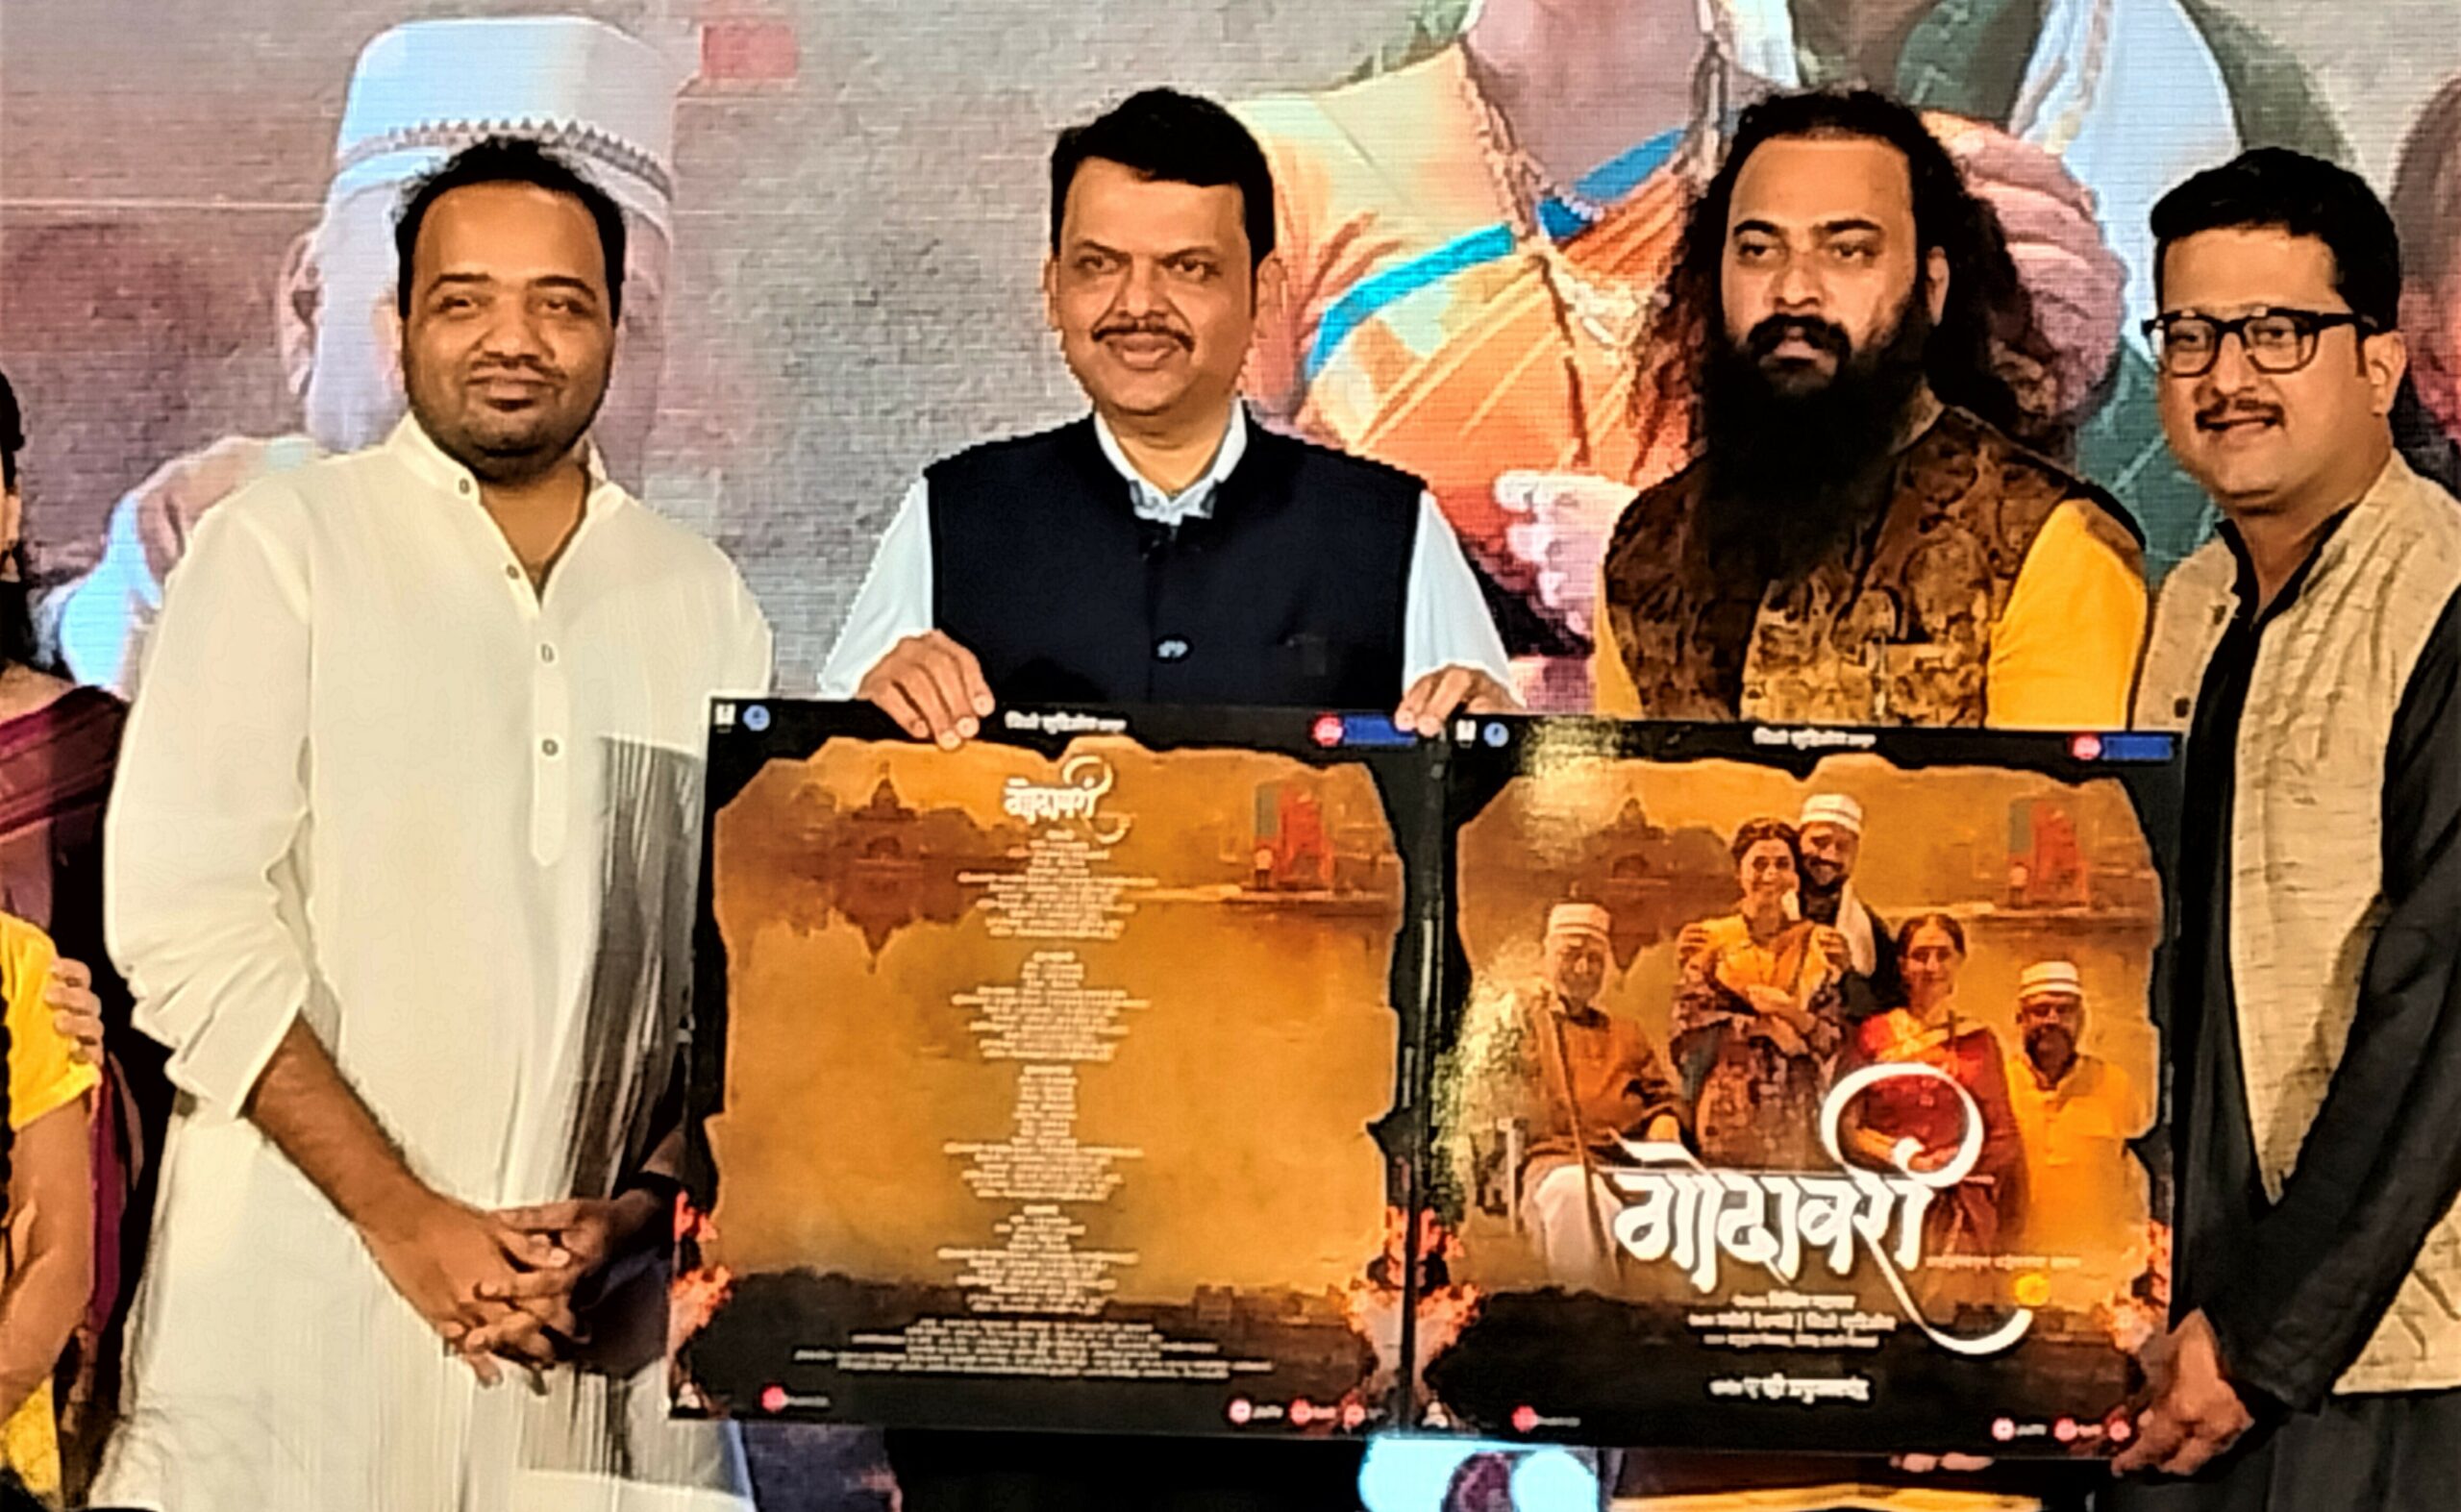 Godavari Movie Will Rekindle Our Relation With Rivers, Says Devendra Fadnavis